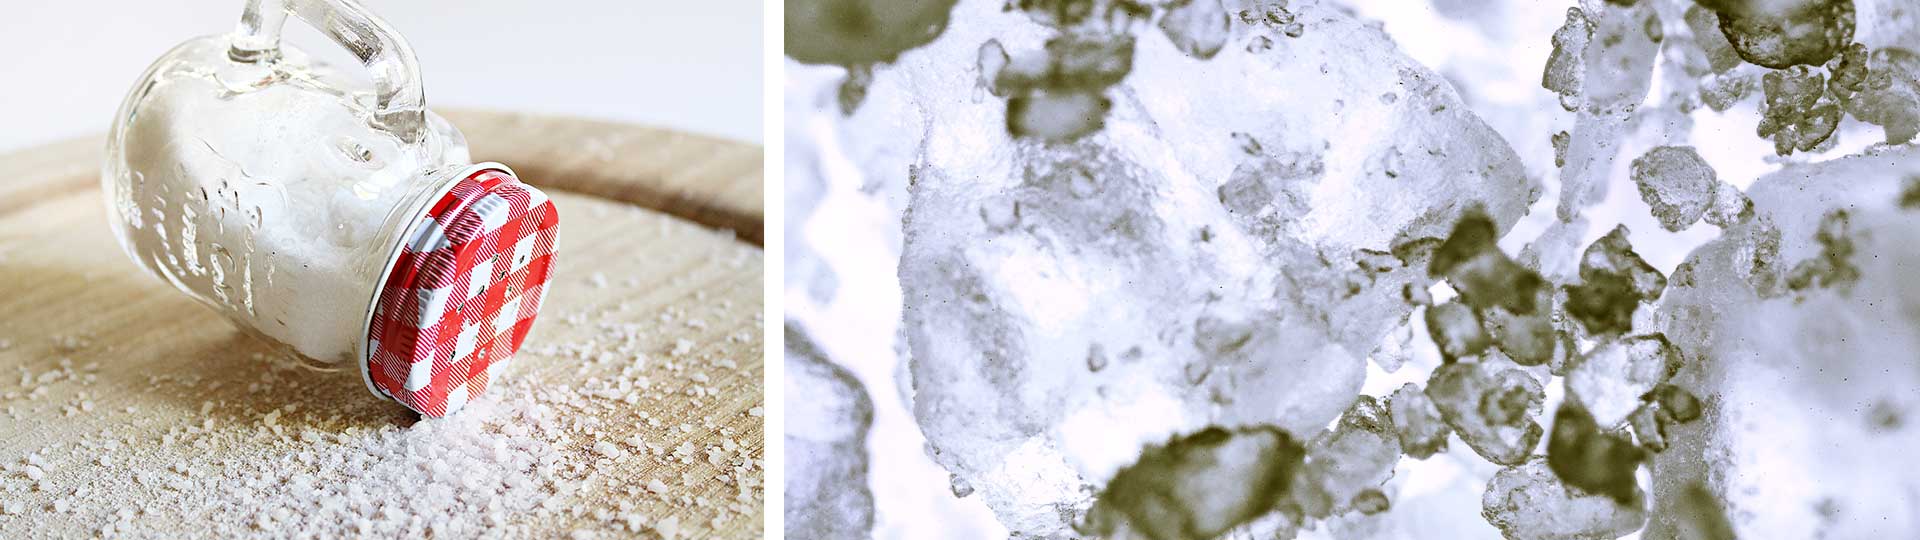 колаж от 2 снимки с бурканче със соло и кристали сол под микроскоп